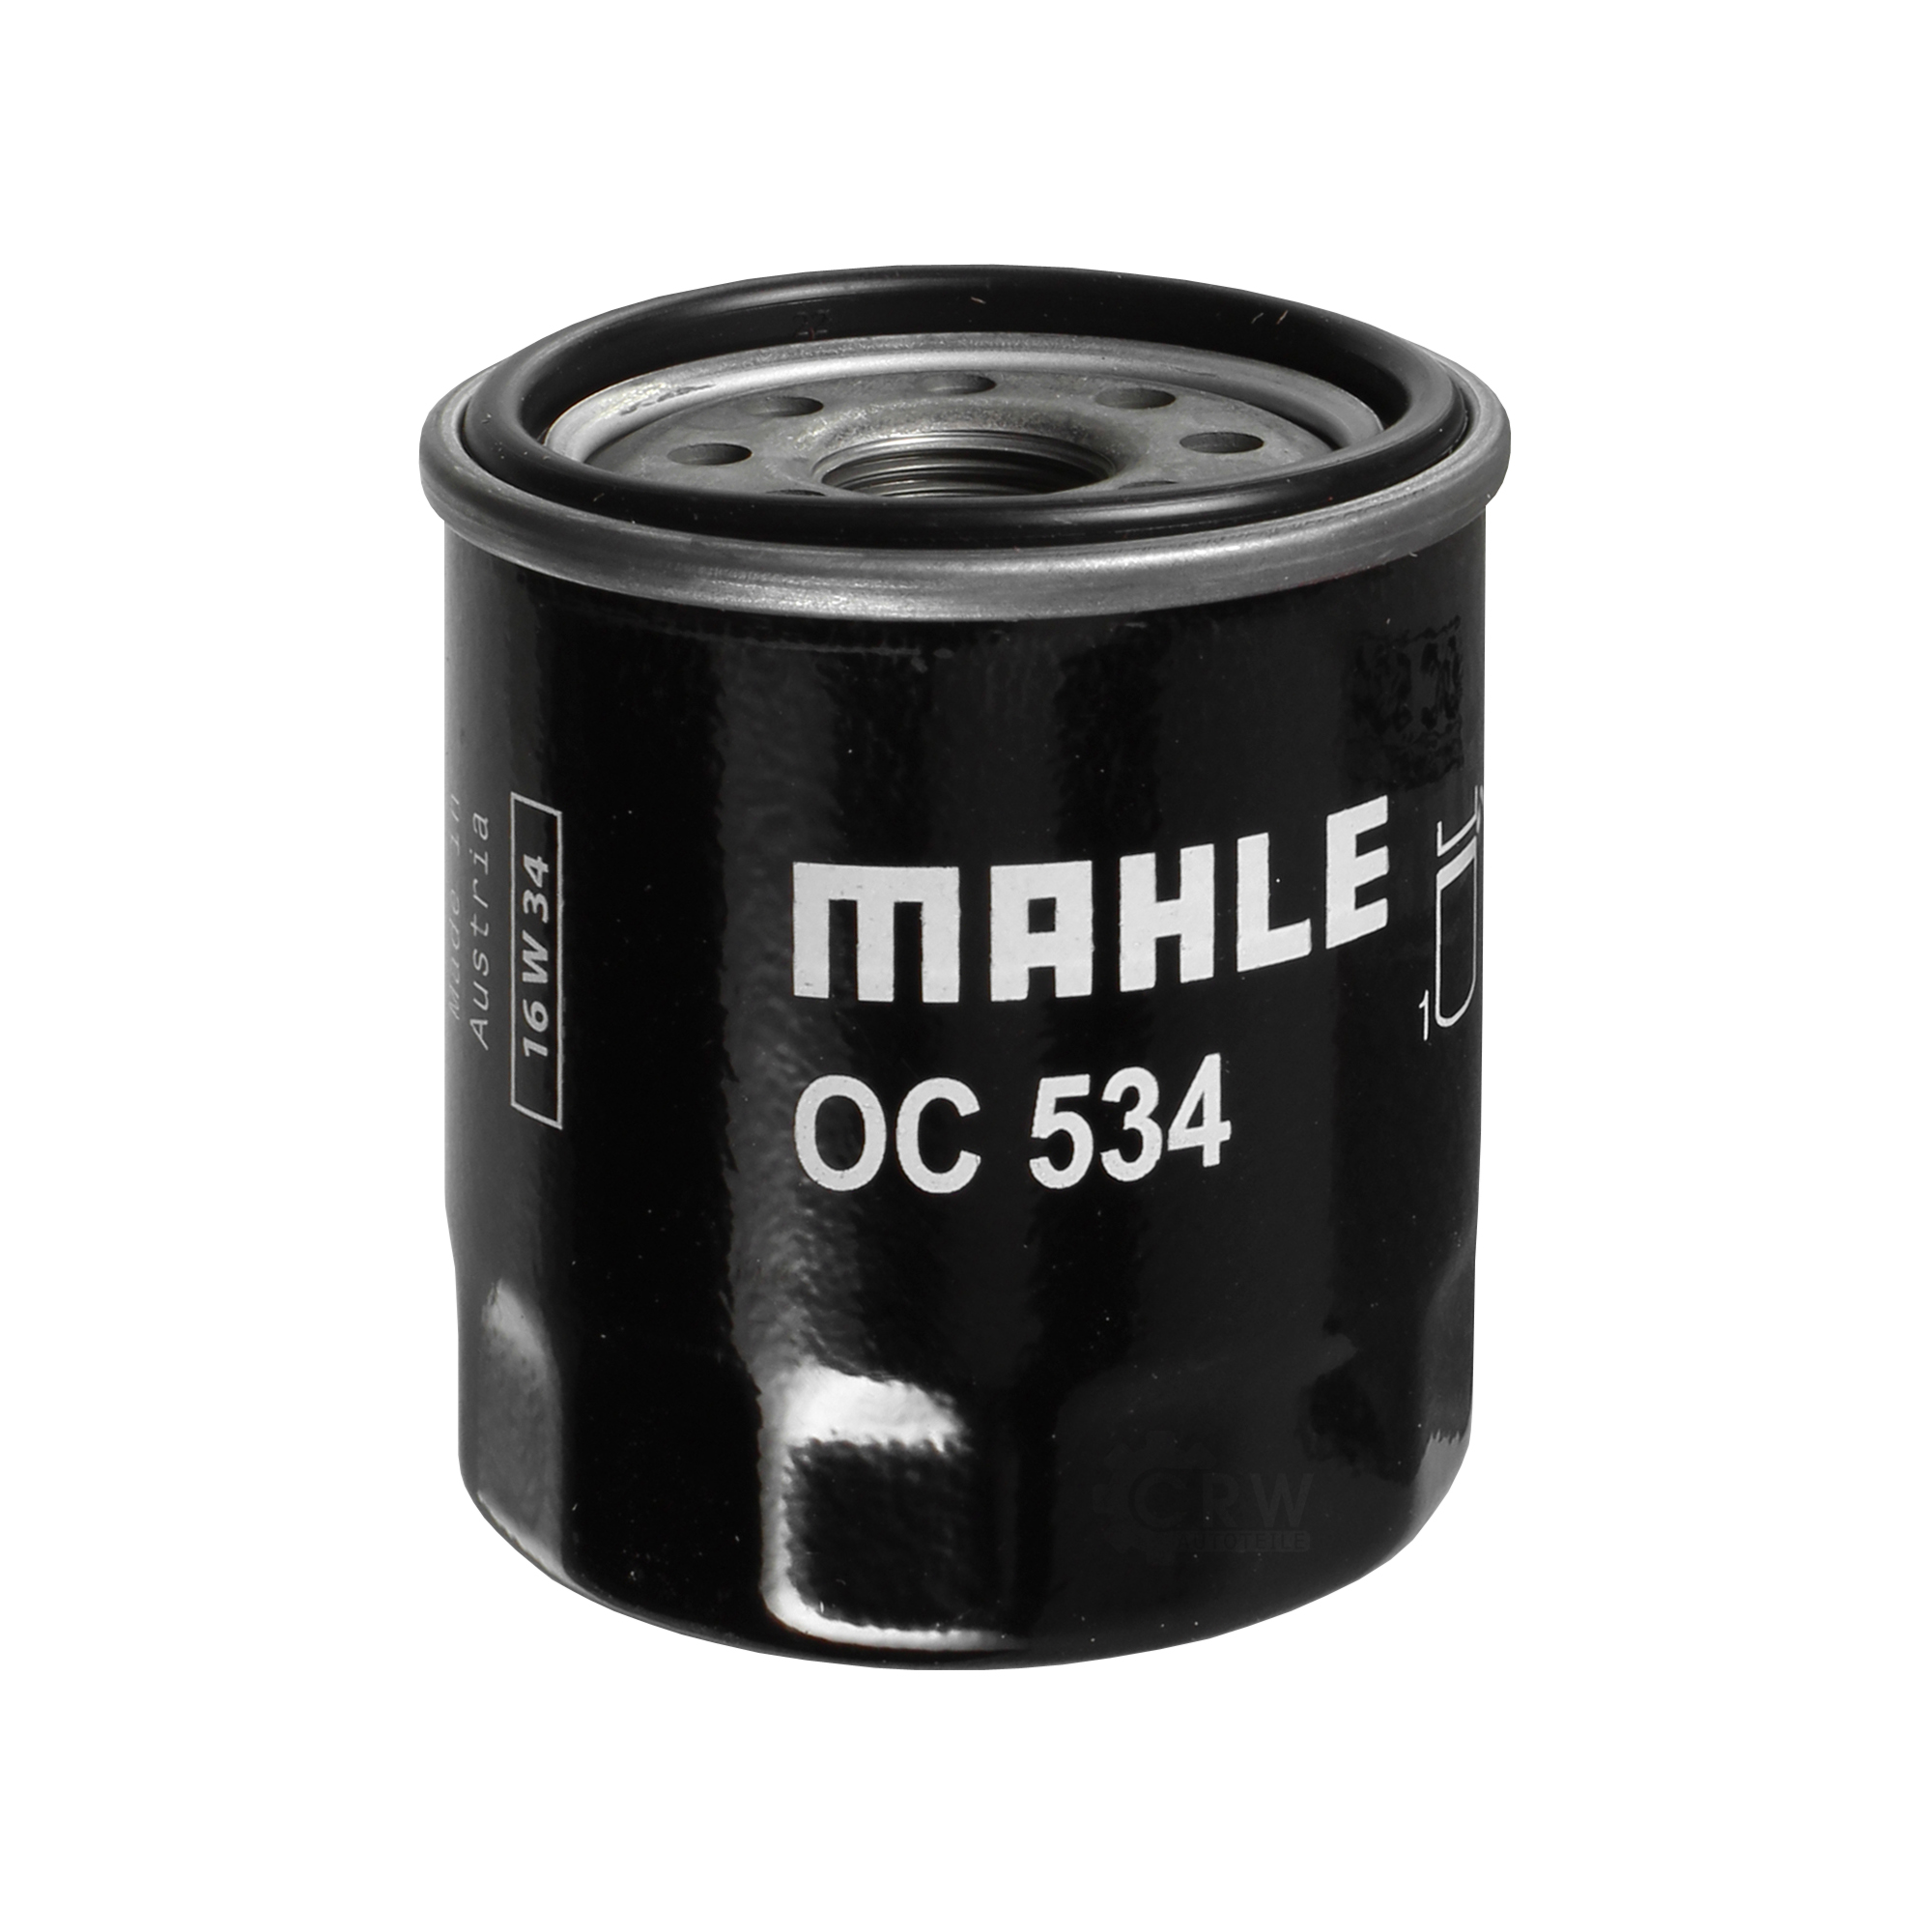 MAHLE / KNECHT Ölfilter OC 534 Öl Filter Oil